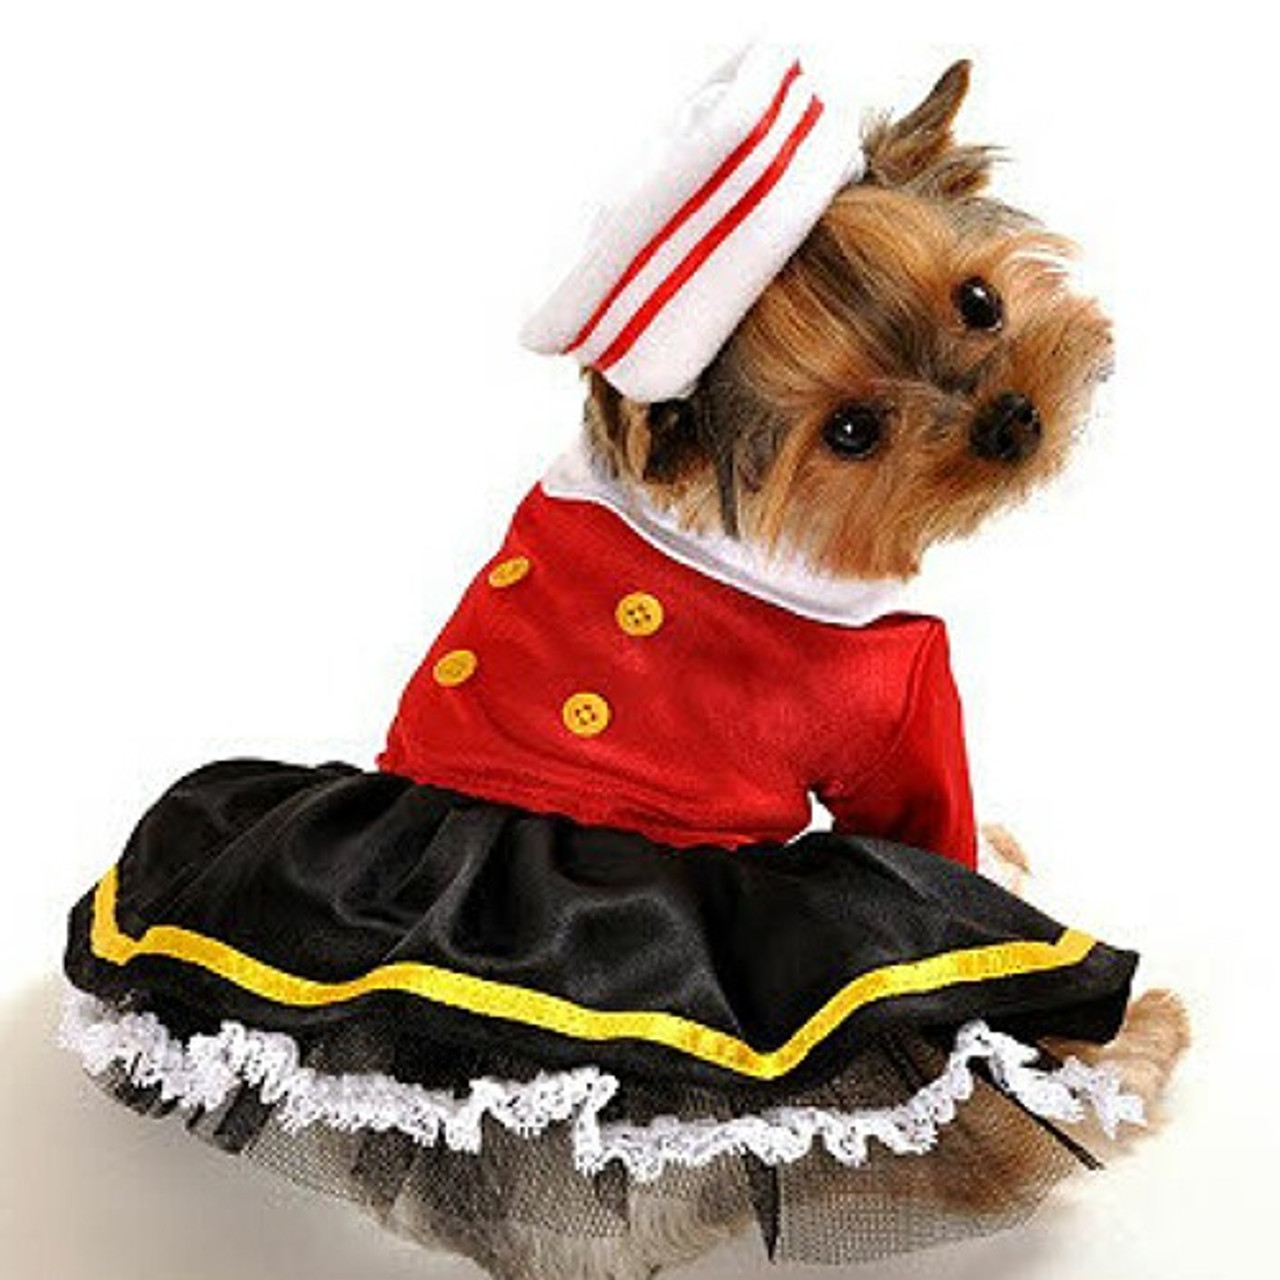 Designer Sailorman's Girlfriend Dog Costume